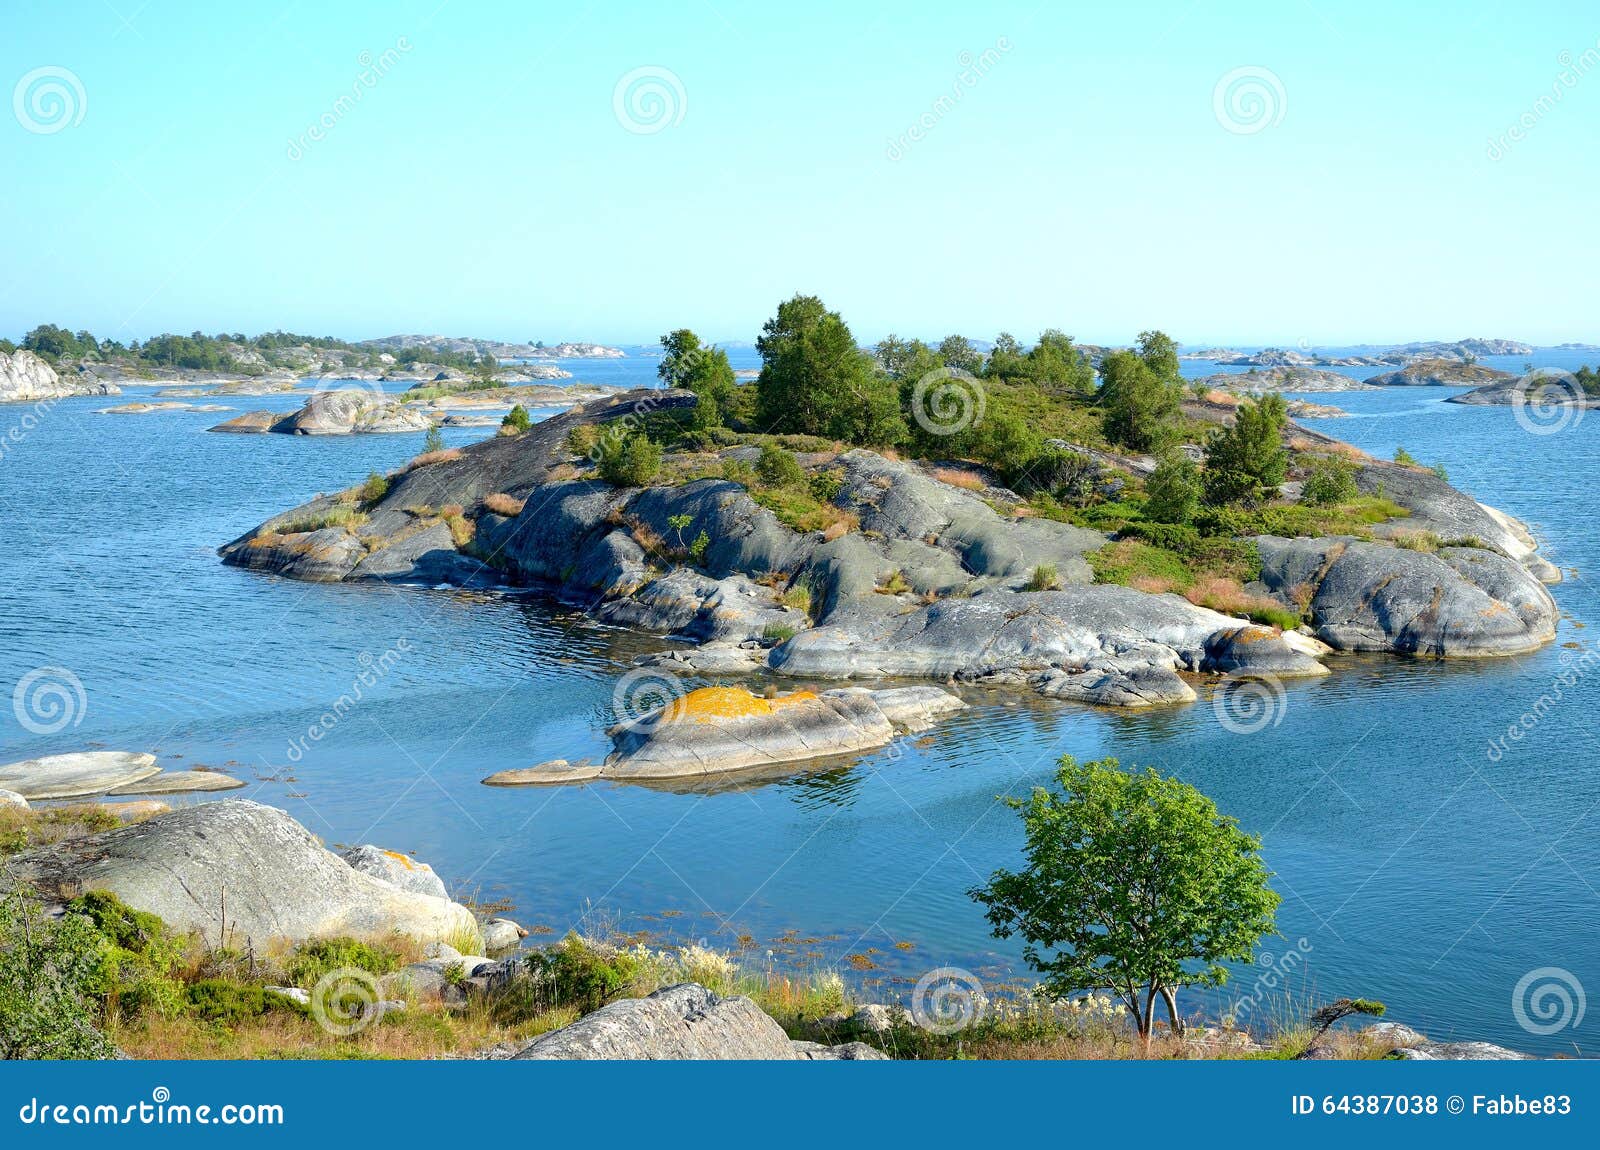 islands in stockholm archipelago